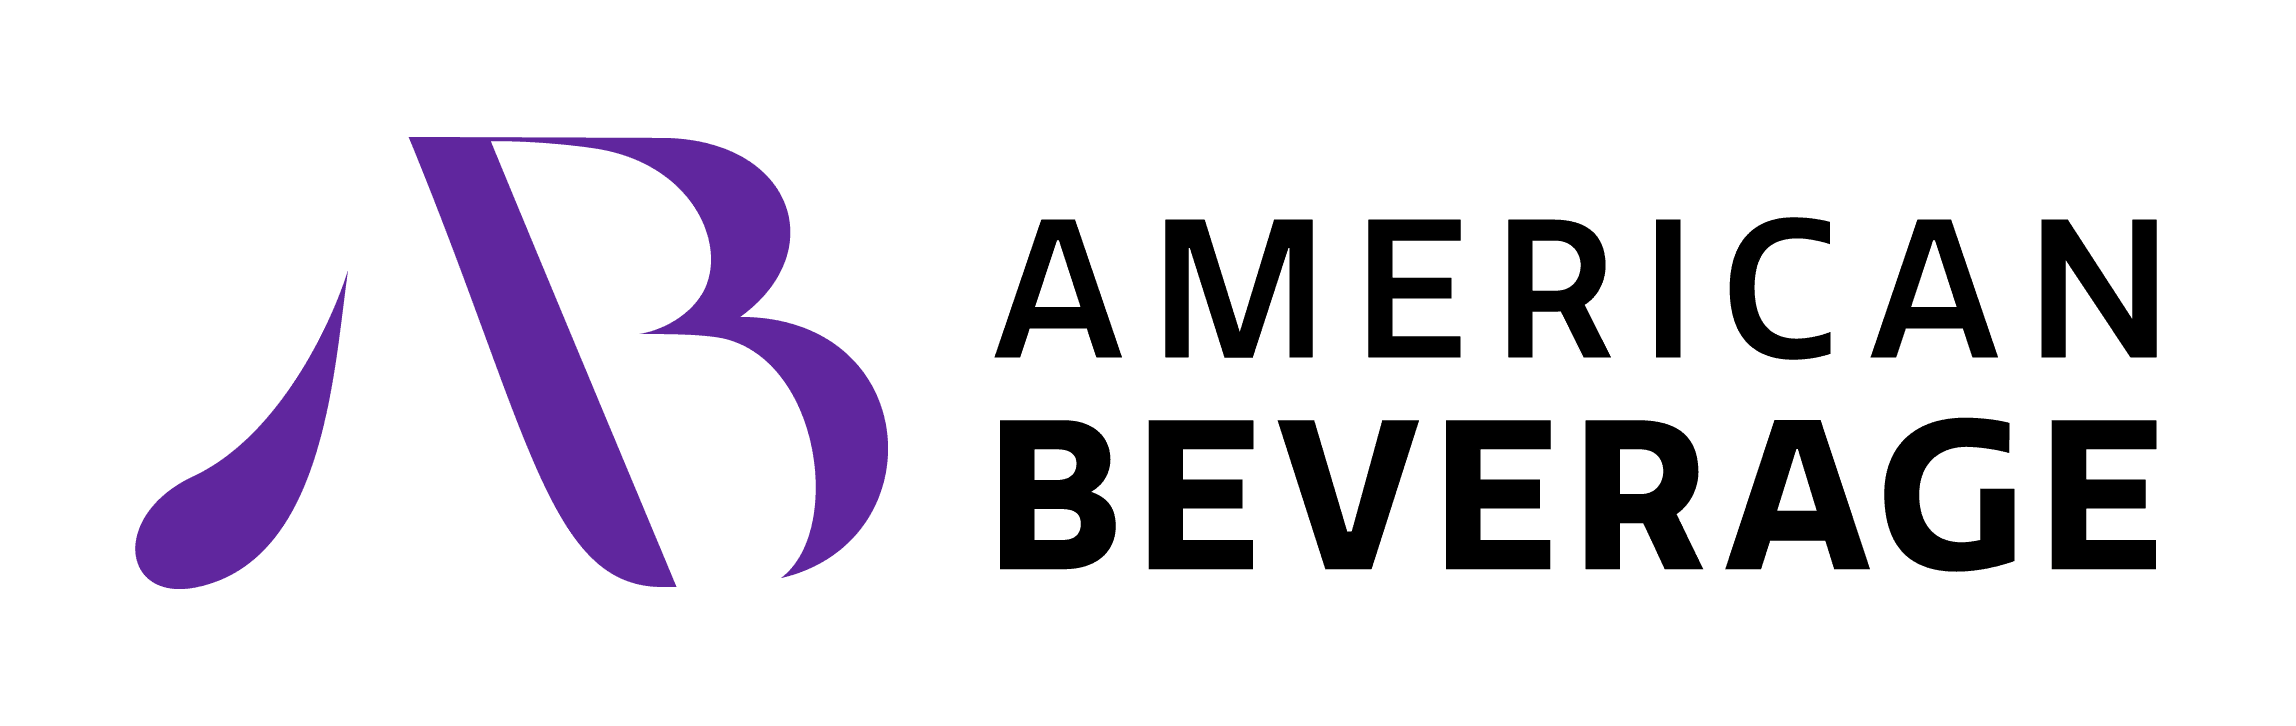 ABA AmericanBeverage Horizontal Color |